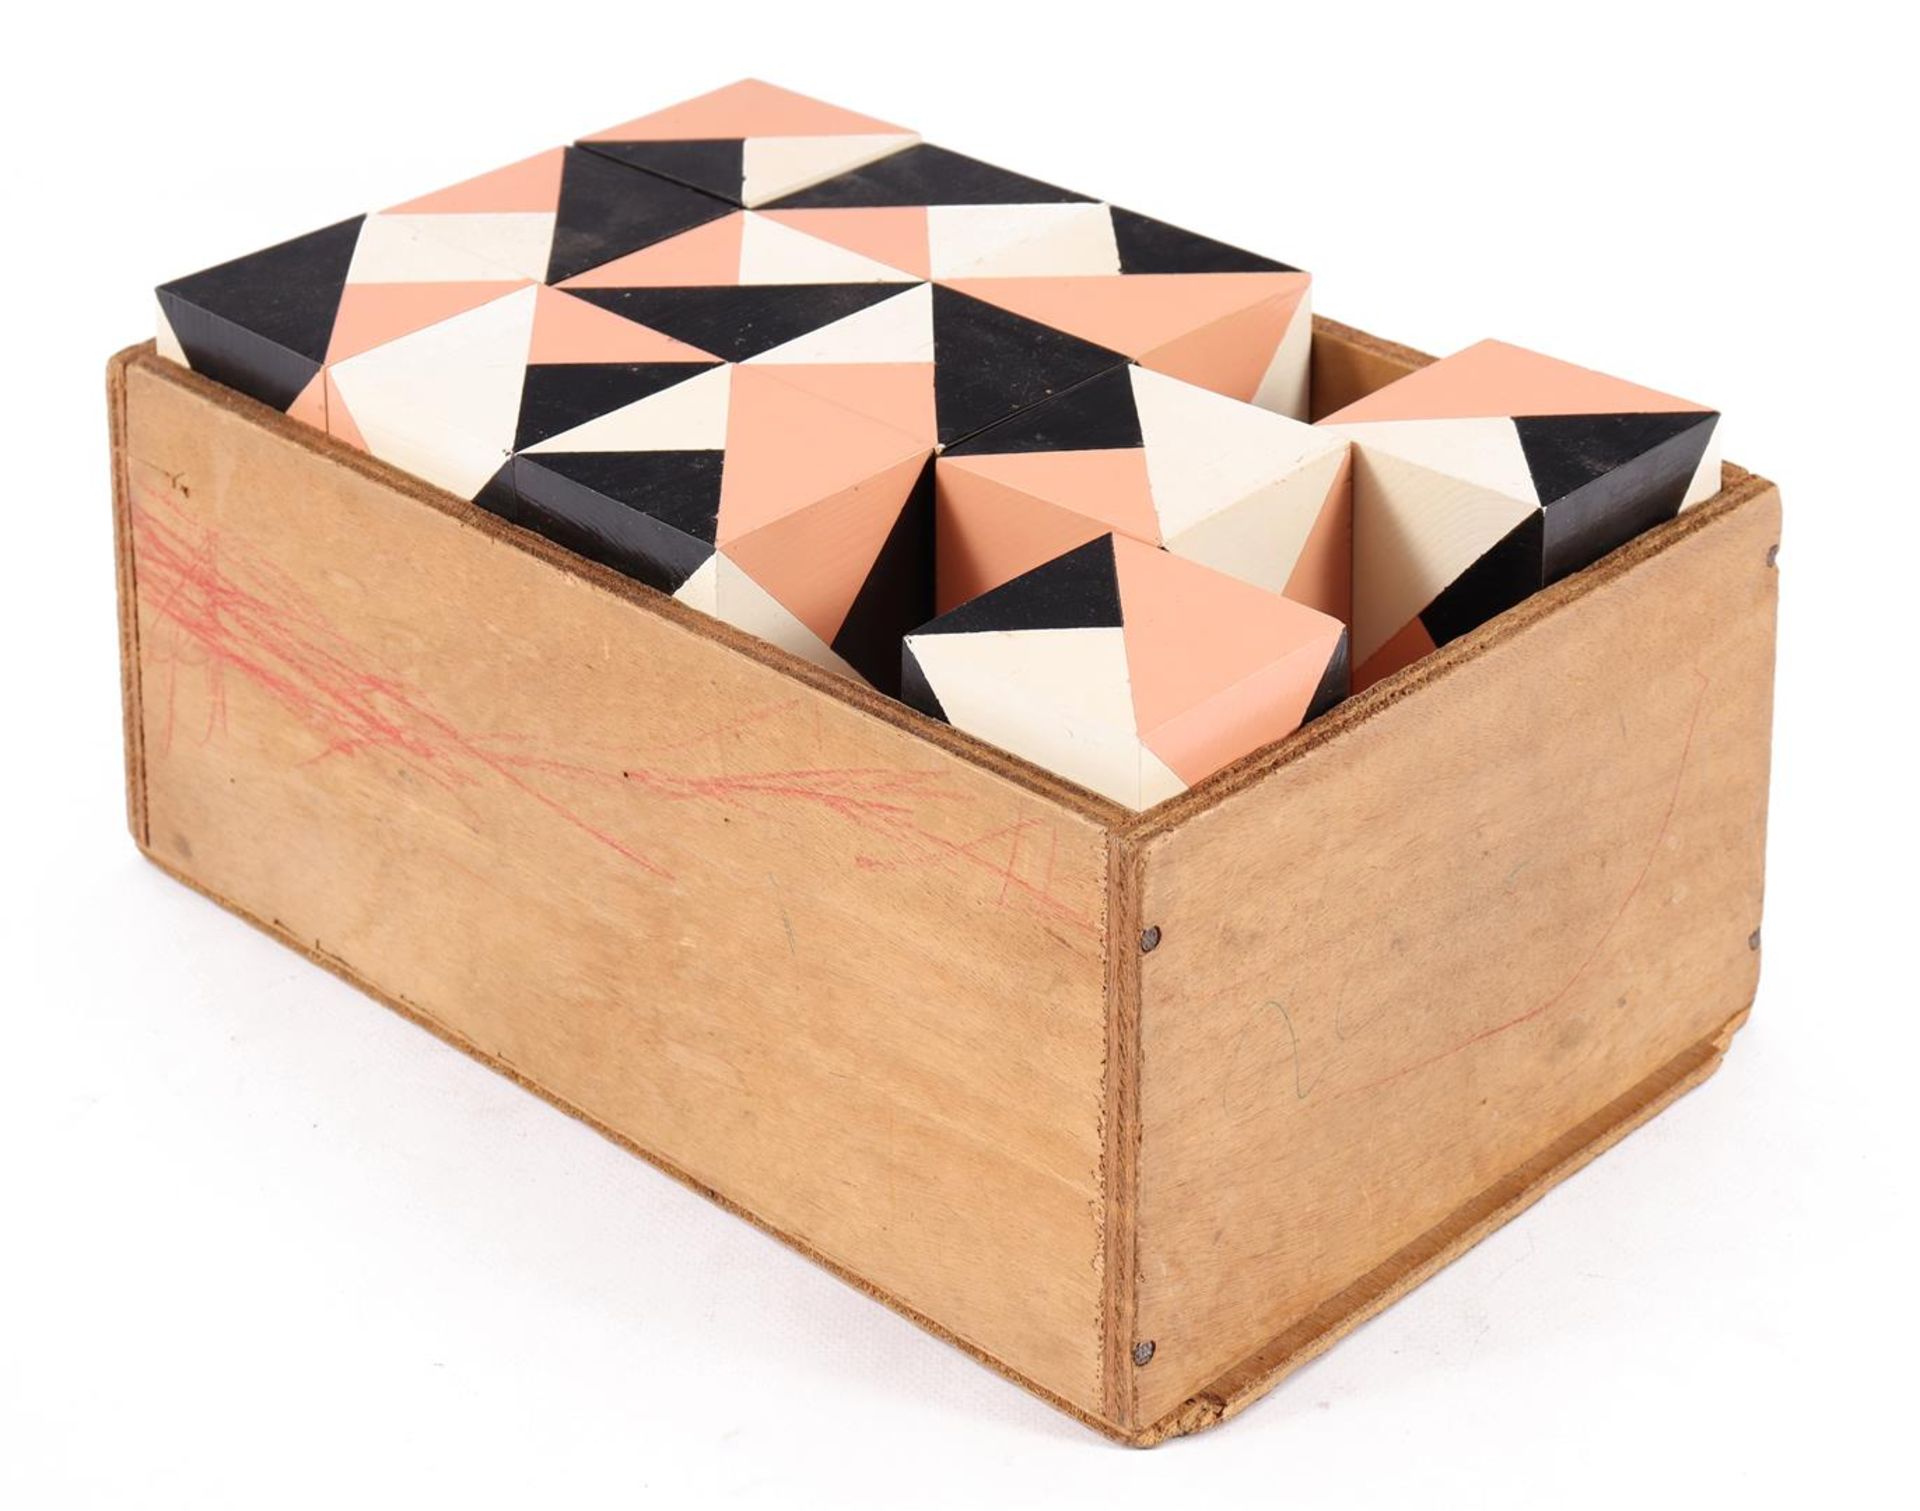 24 wooden blocks in the style of Escher